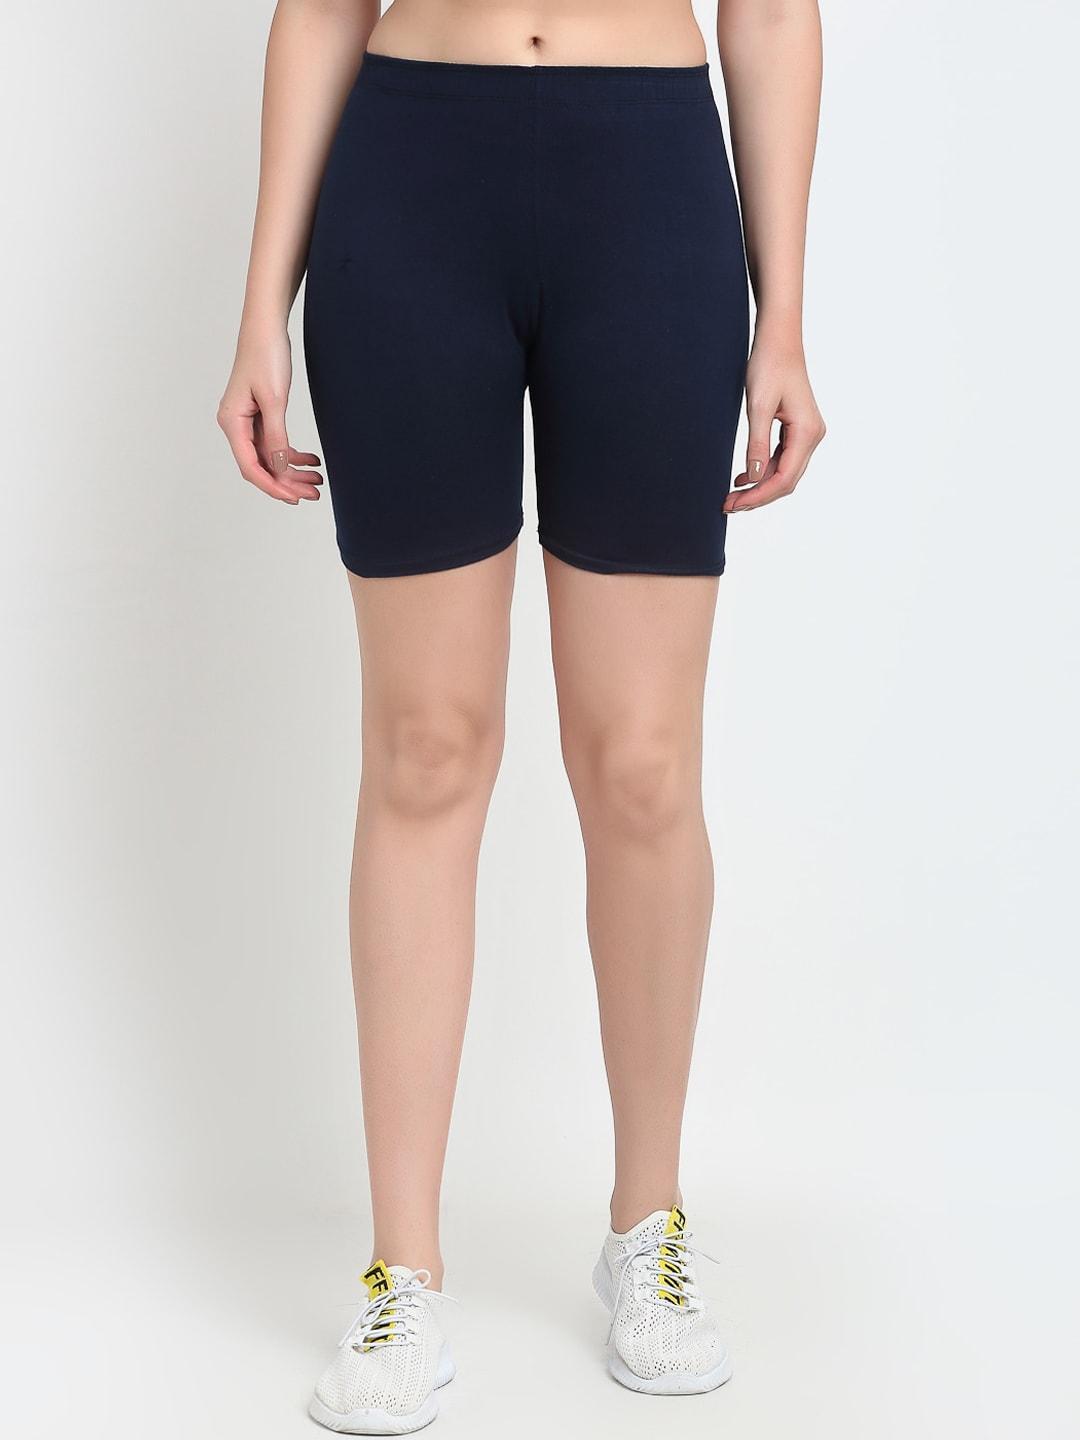 GRACIT Women Navy Blue Cycling Sports Shorts